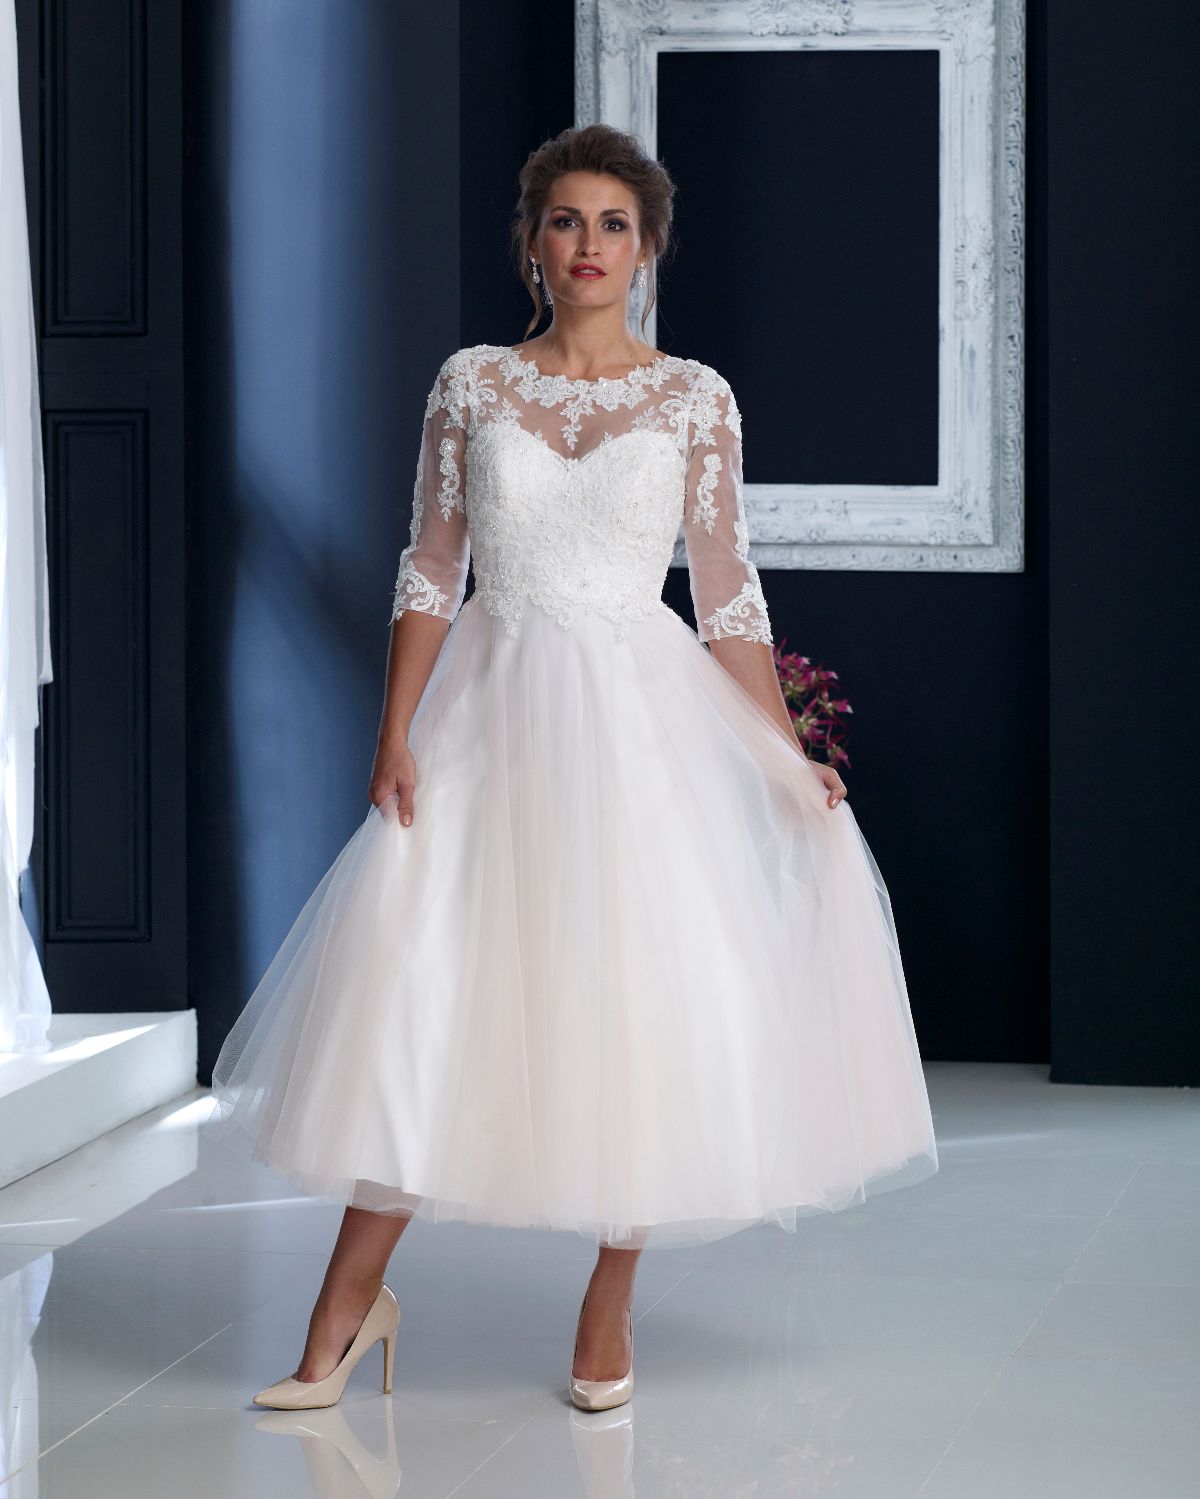 Best Dress 2 Impress Bridal-Image-88